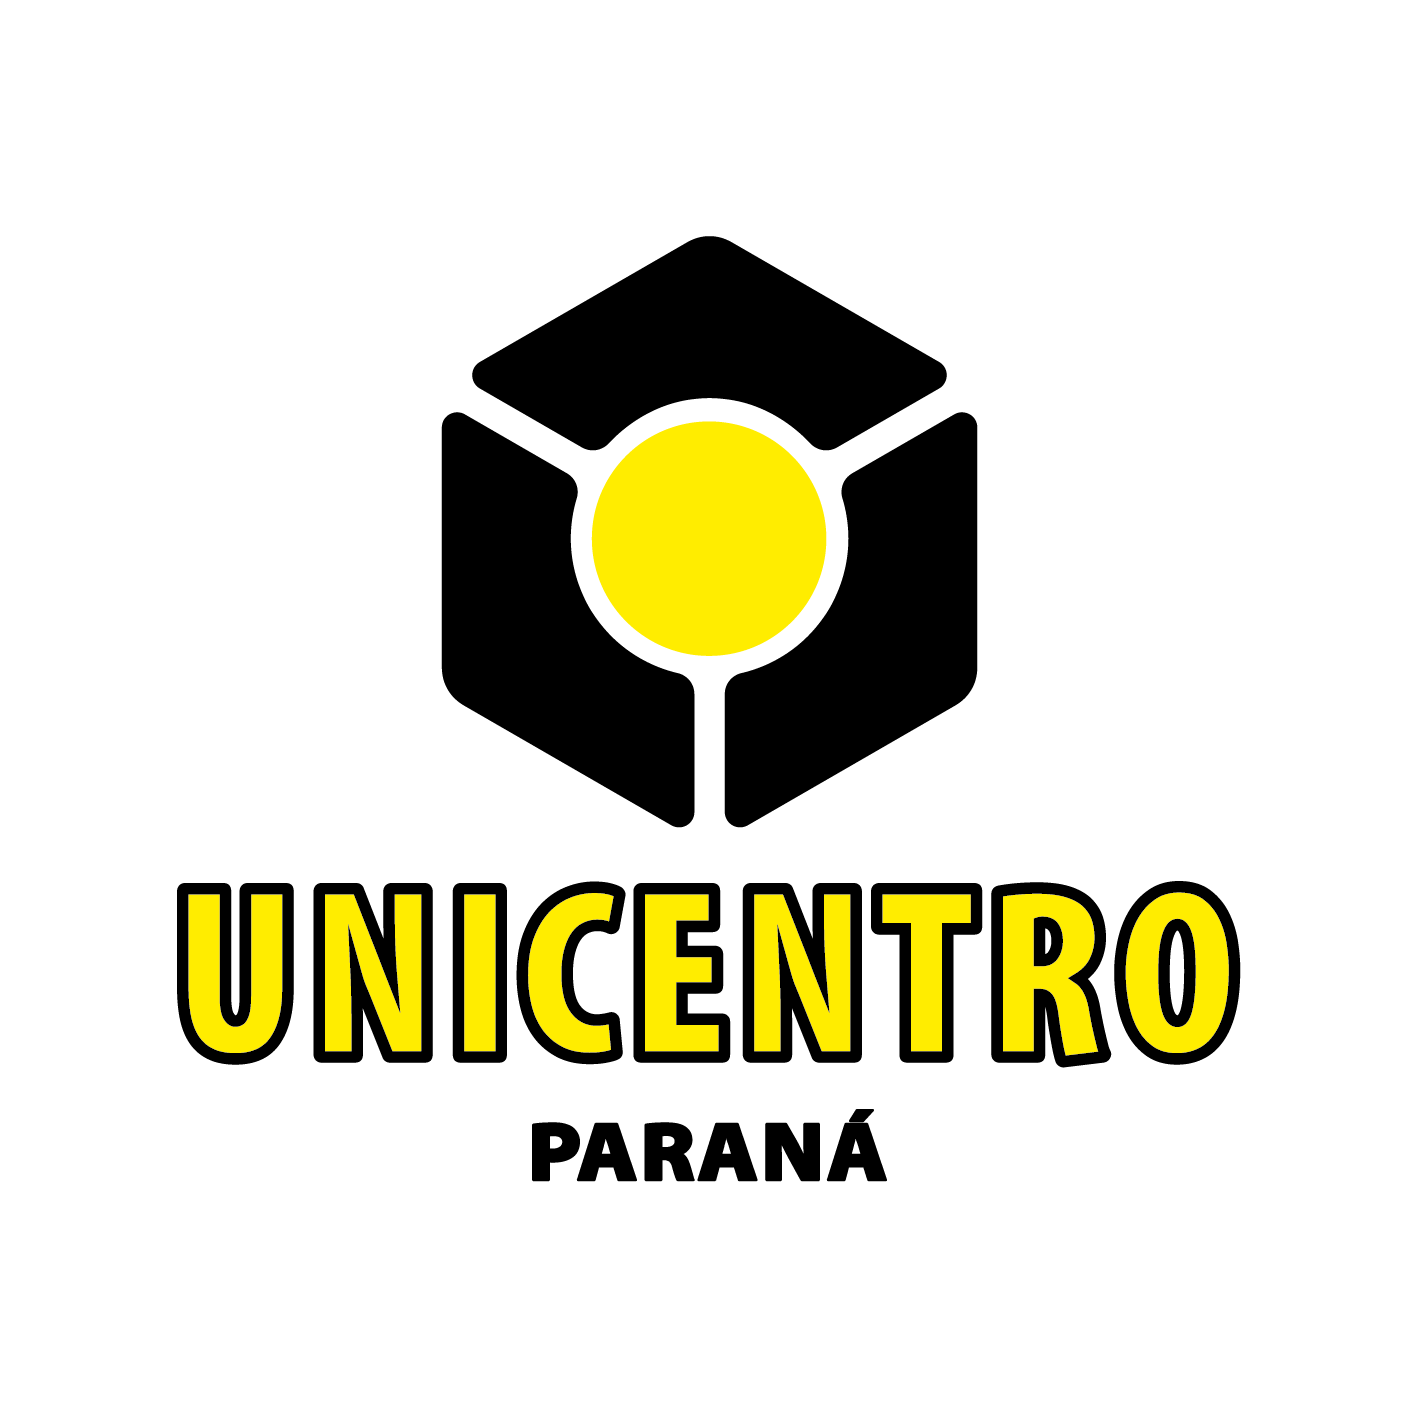 Unicentro